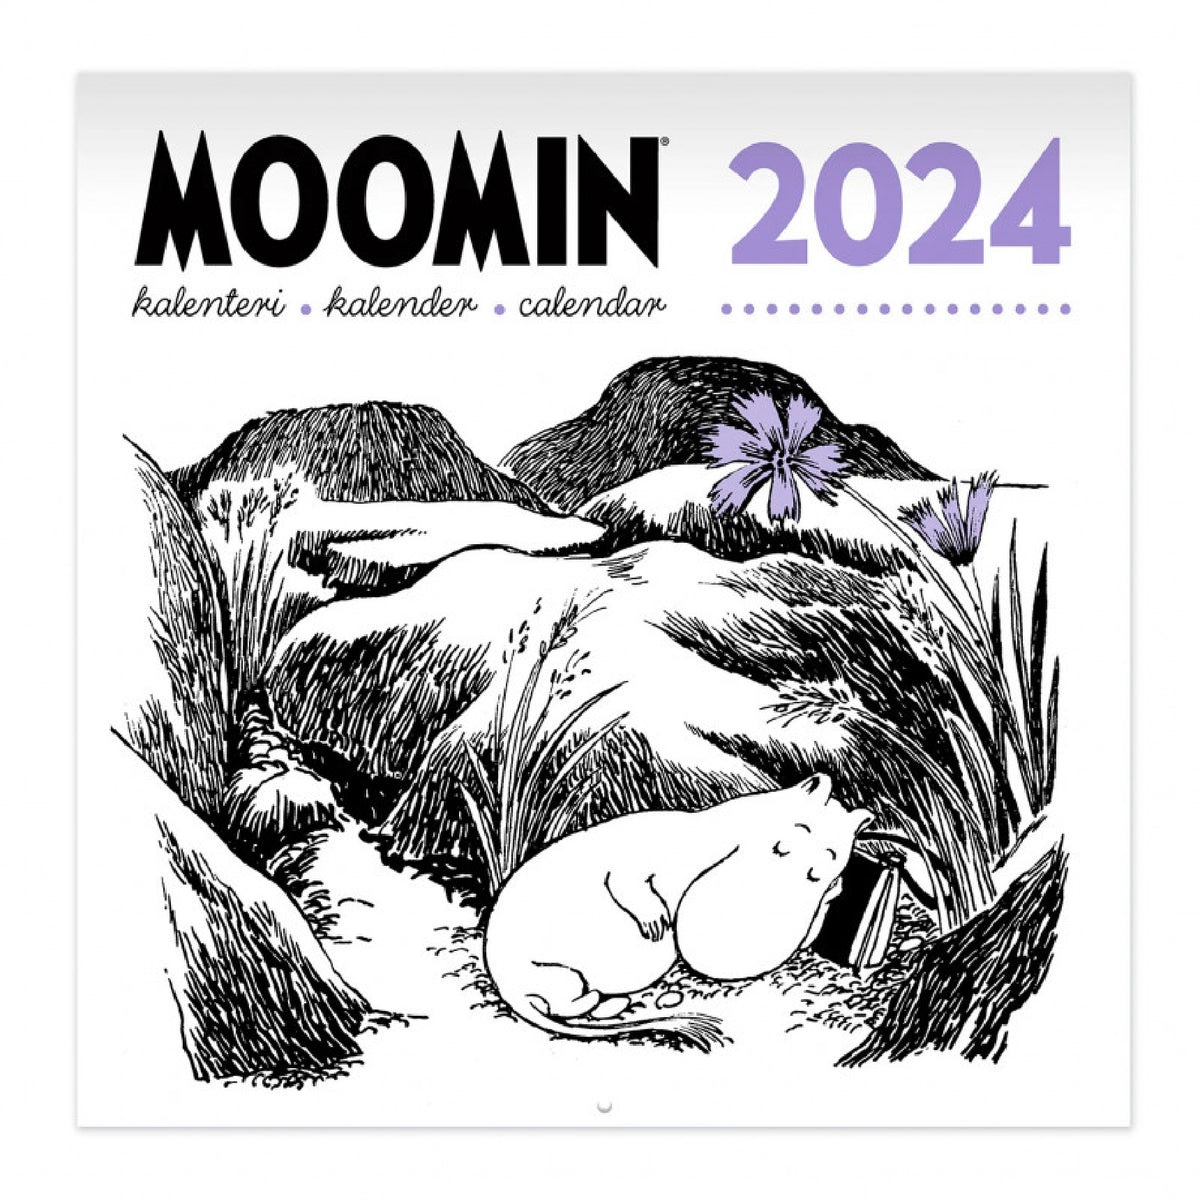 Moomin Wall Calendar 2024 size 30x30 cm The Official Moomin Shop